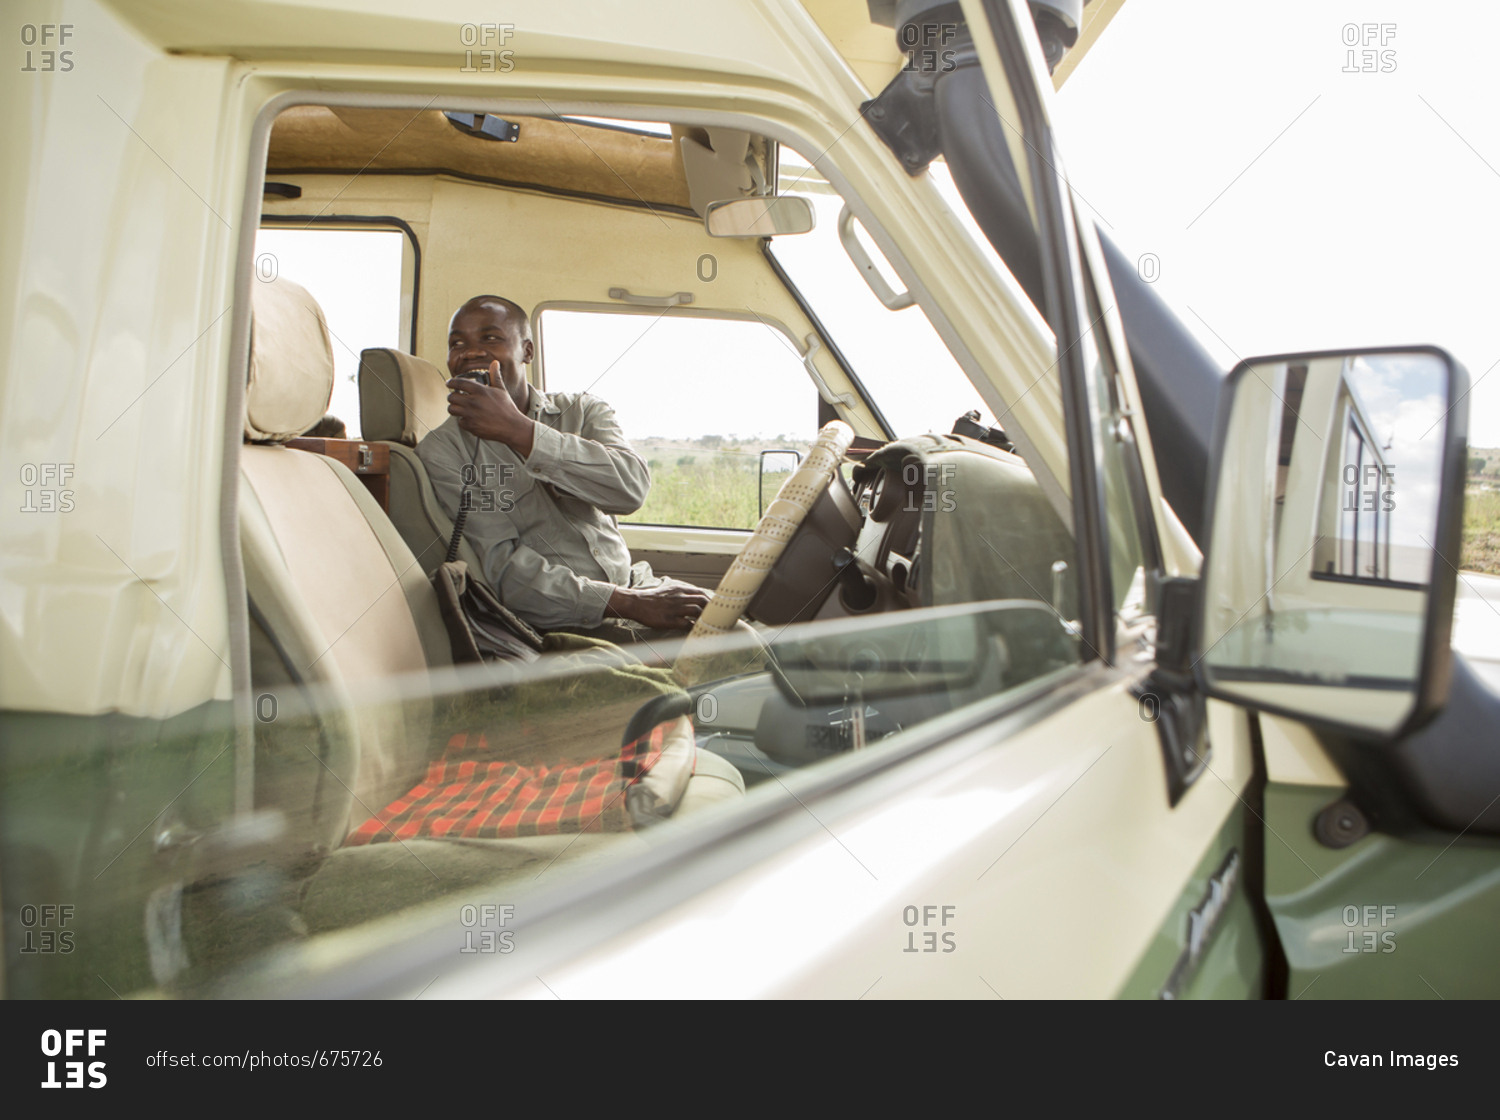 Park ranger talking on CB radio while sitting in car